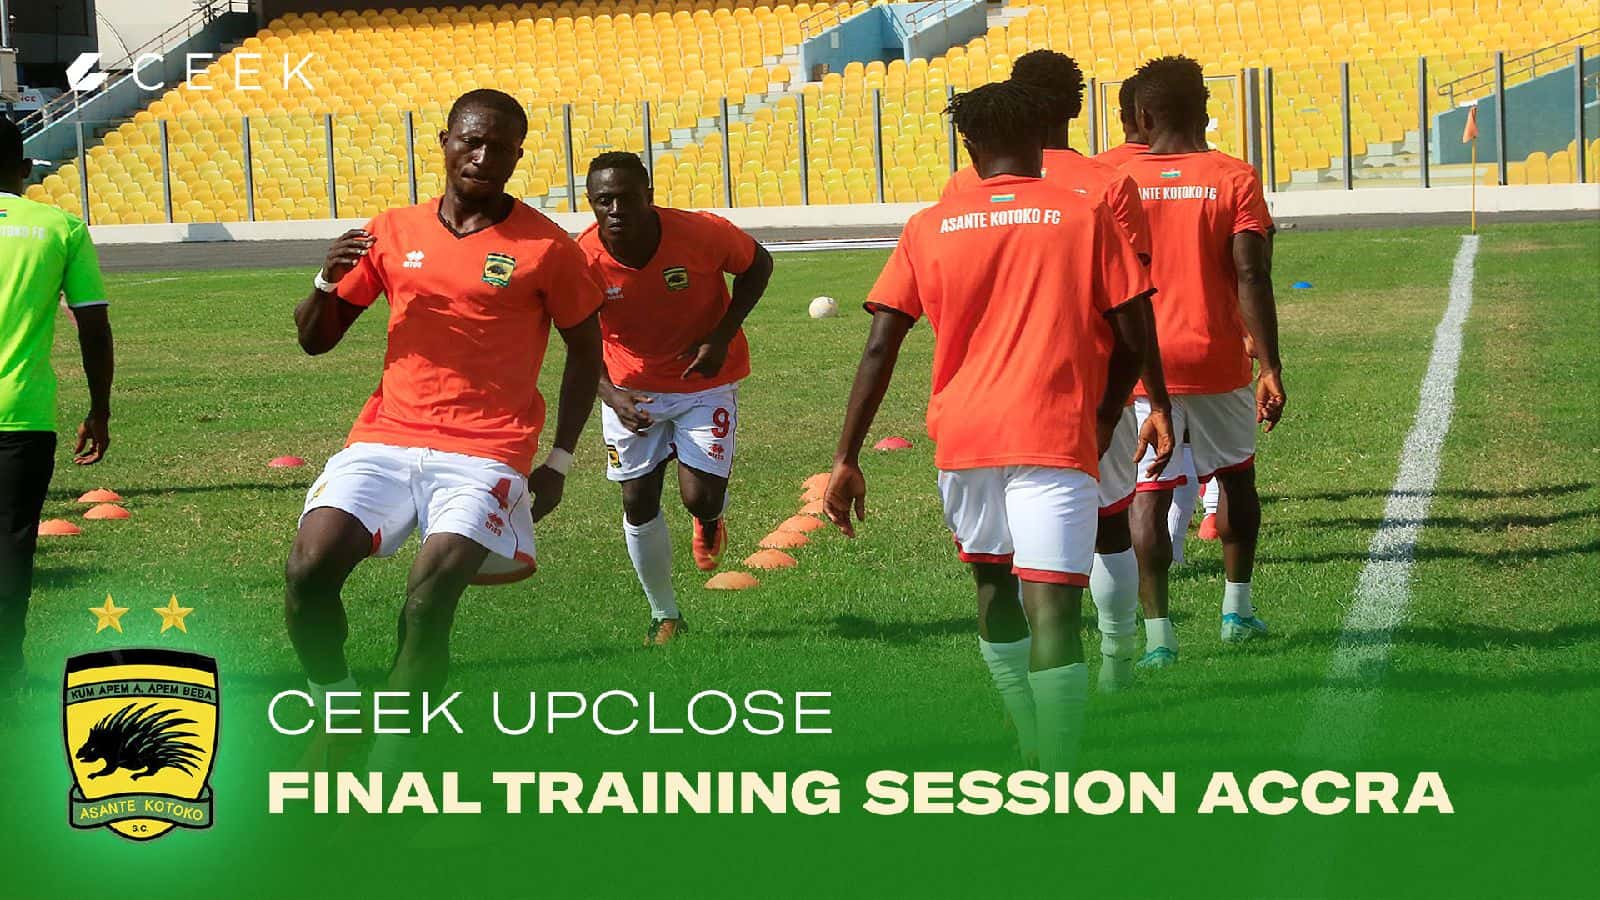 Final Training Session Accra ceek.com